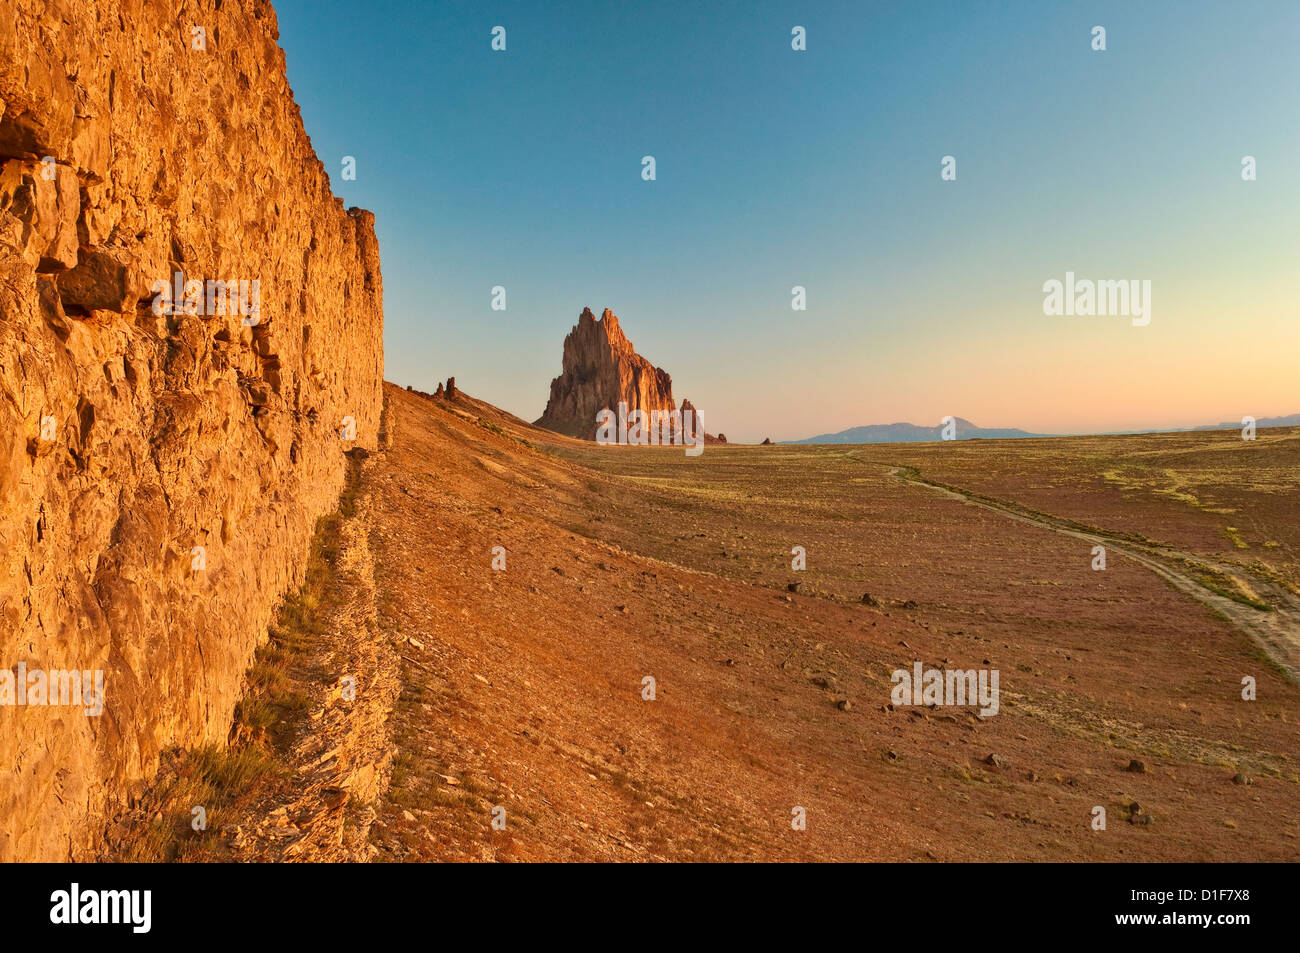 Shiprock, heiliger Navajo-Berg, Monolith, Deichrücken links, bei Sonnenaufgang, New Mexico, USA Stockfoto